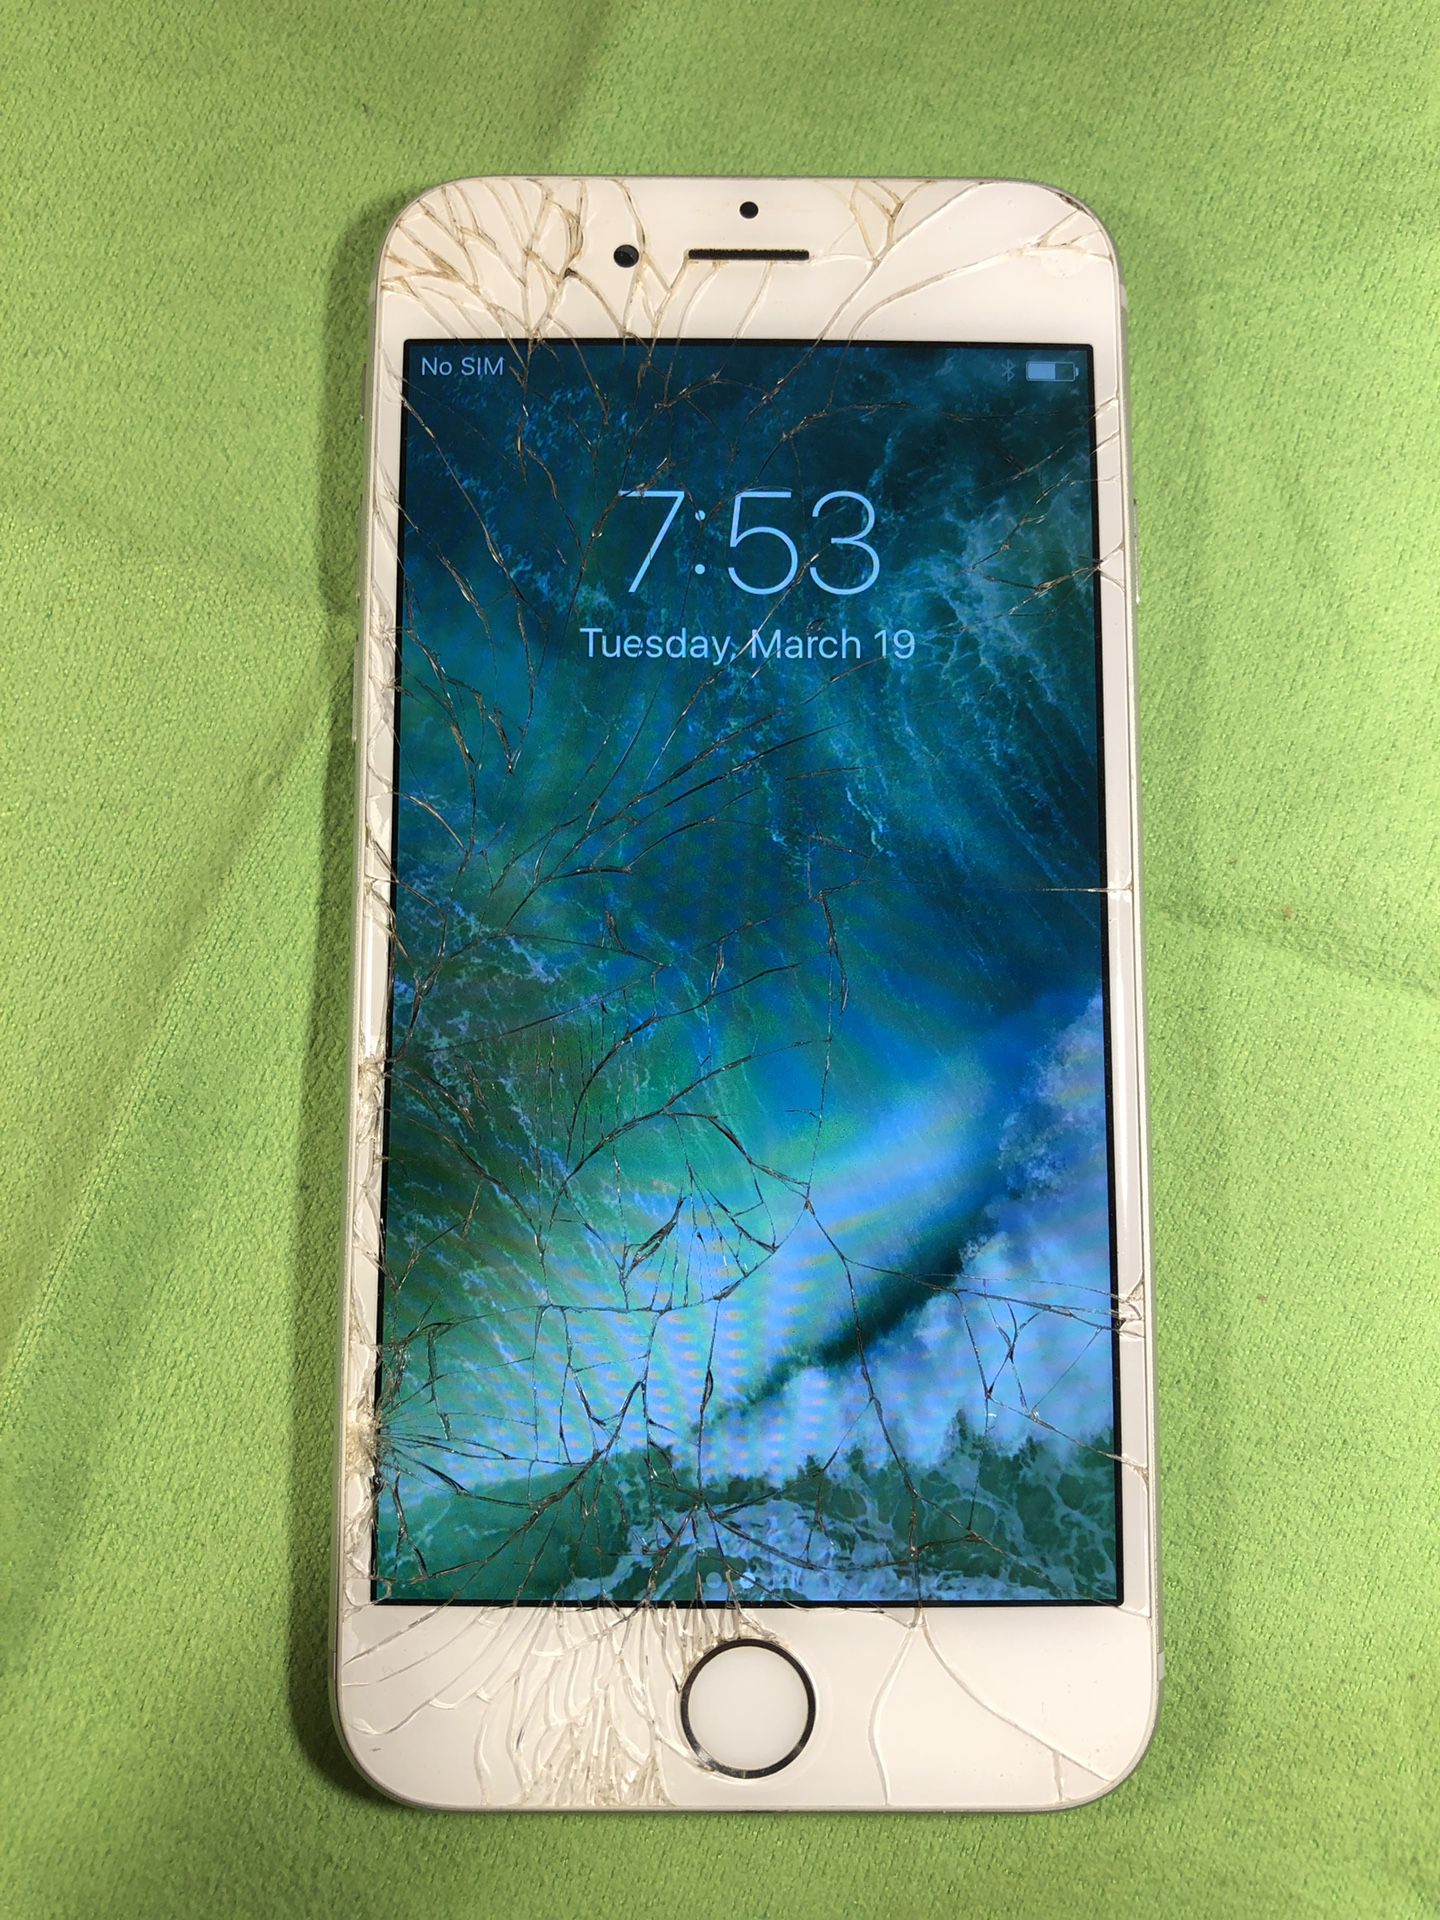 Apple iPhone 6 16GB Cracked